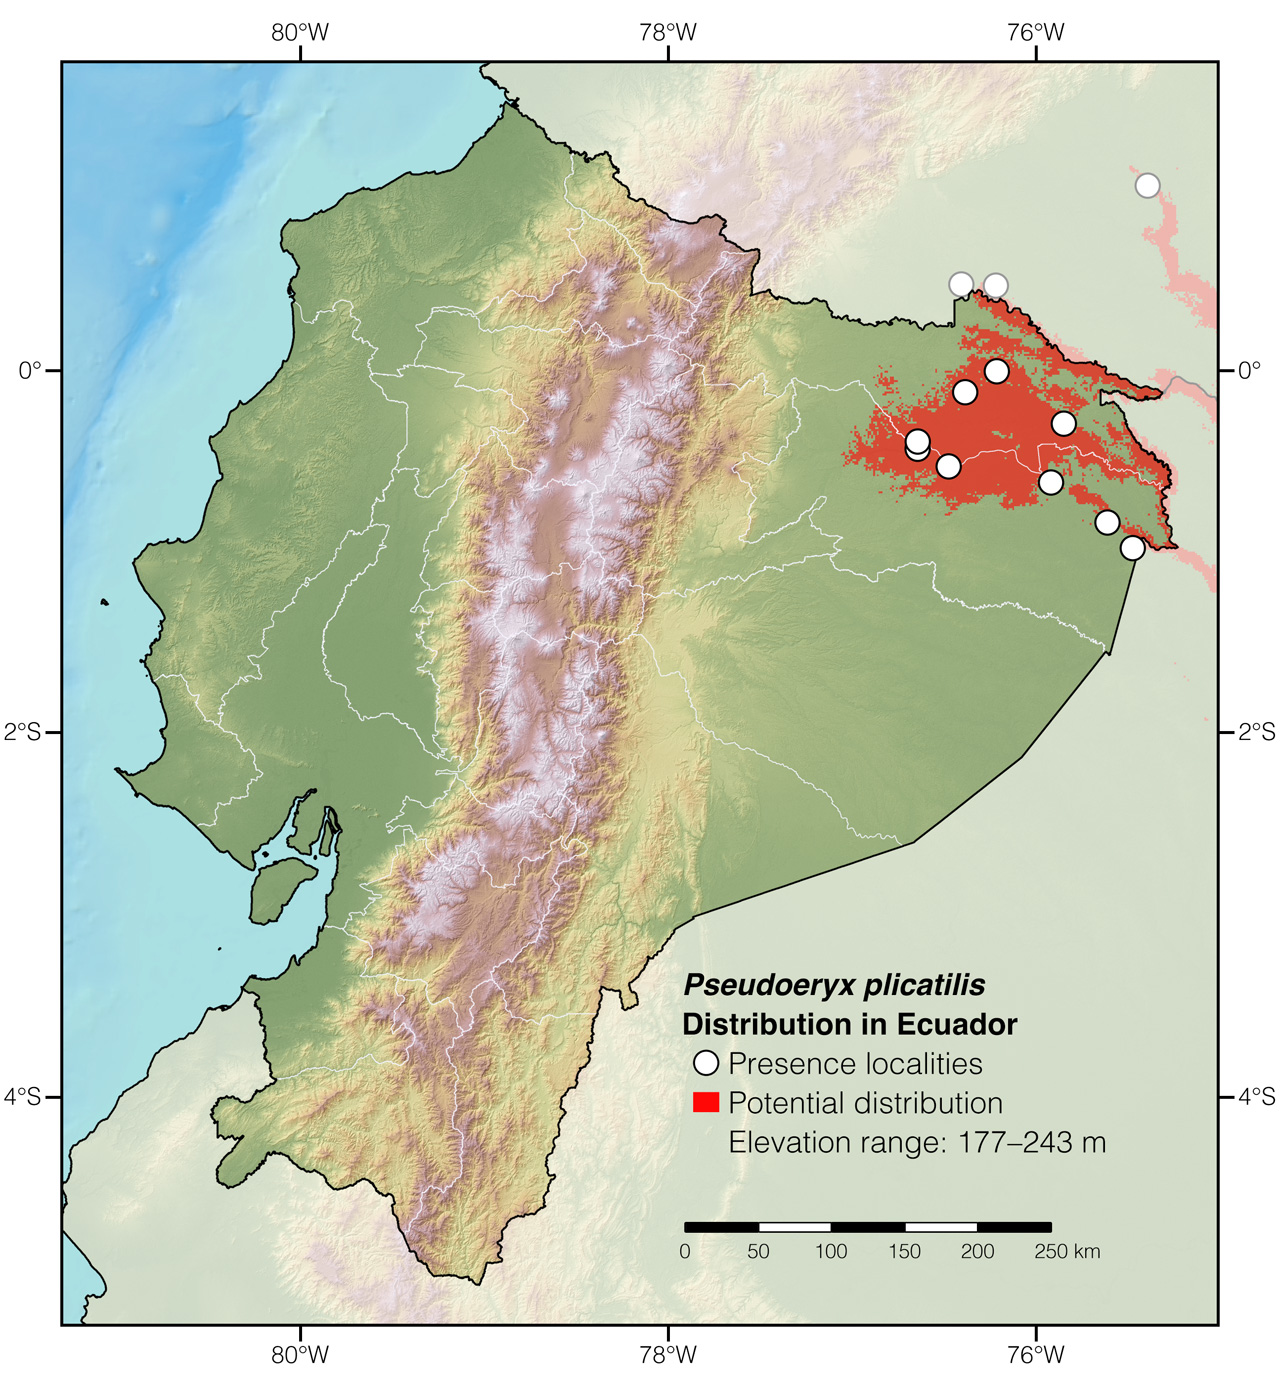 Distribution of Pseudoeryx plicatilis in Ecuador